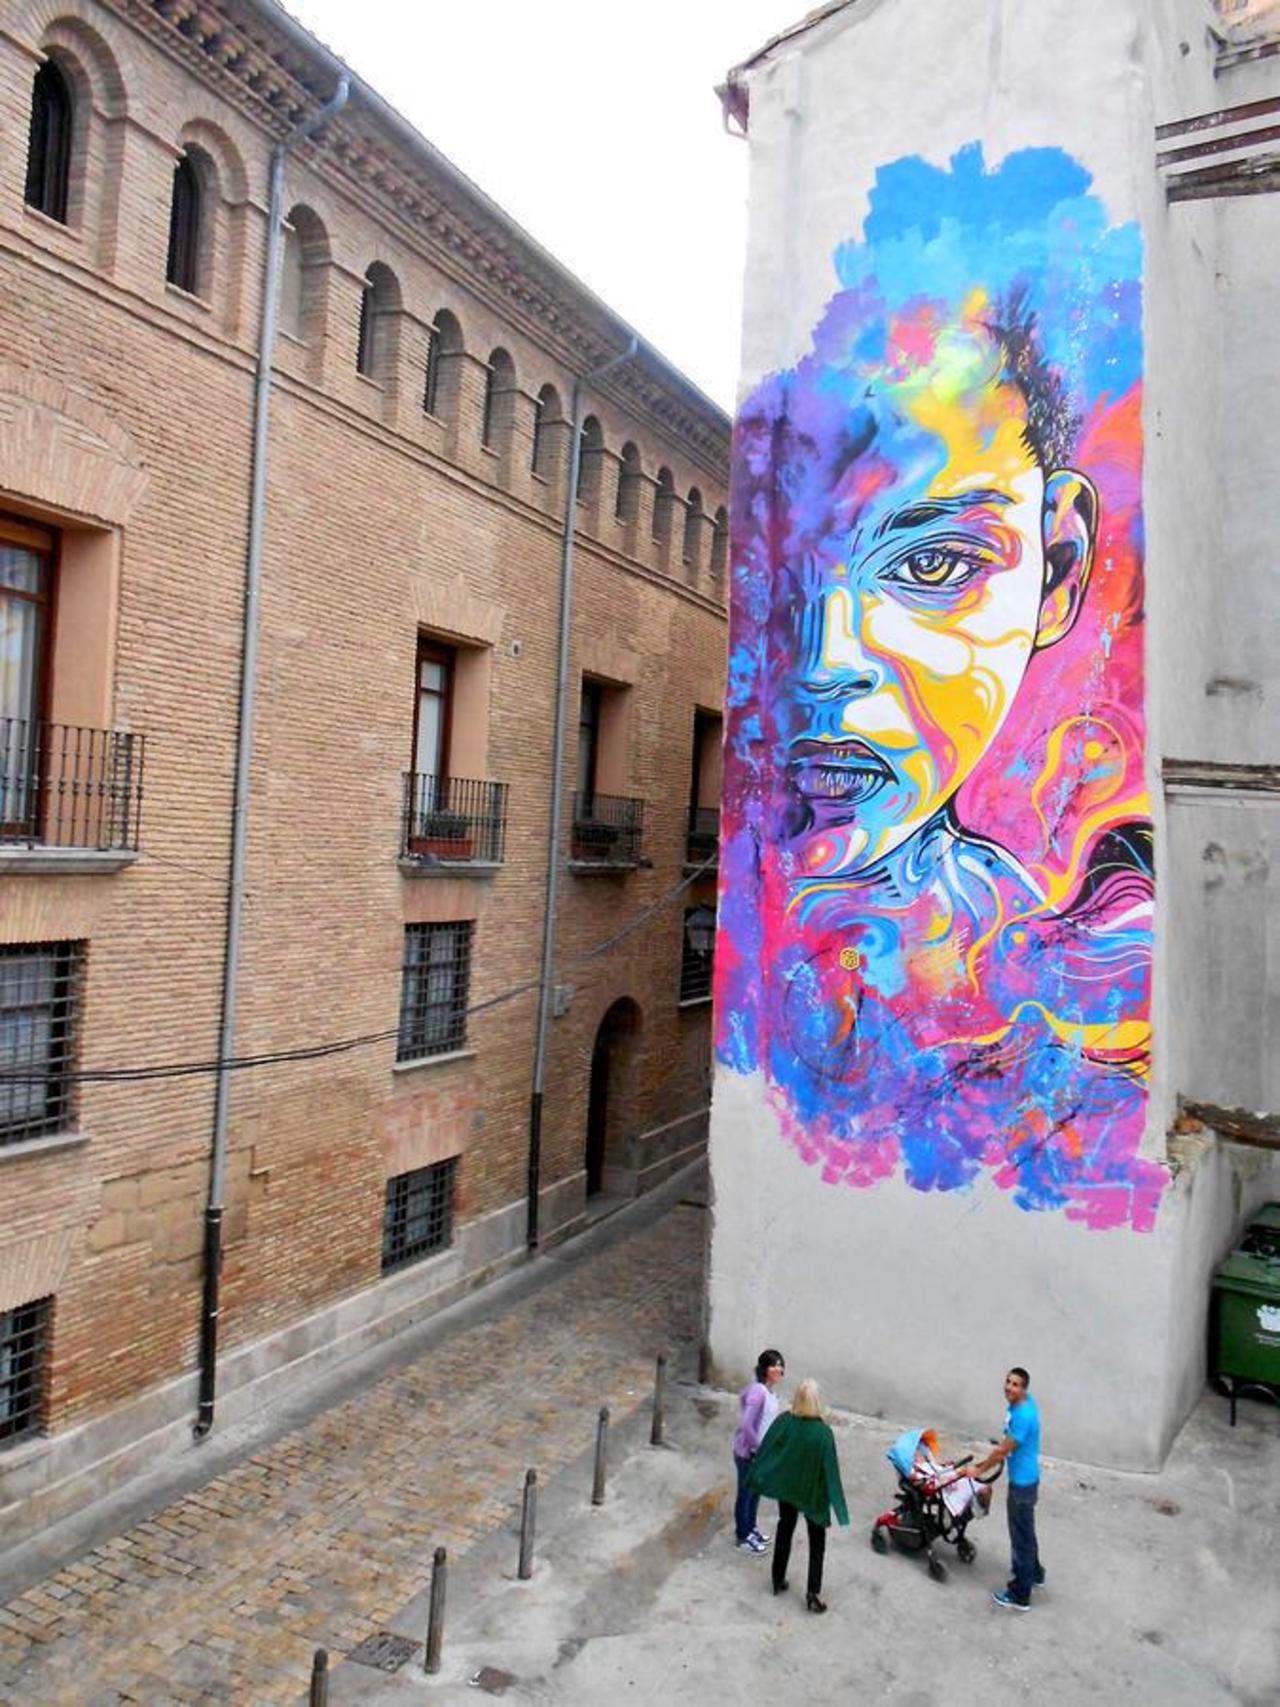 Belle photo RT : @Pitchuskita: C215
Barcelona
#streetart #art #graffiti #mural http://t.co/wCGKwo0llM